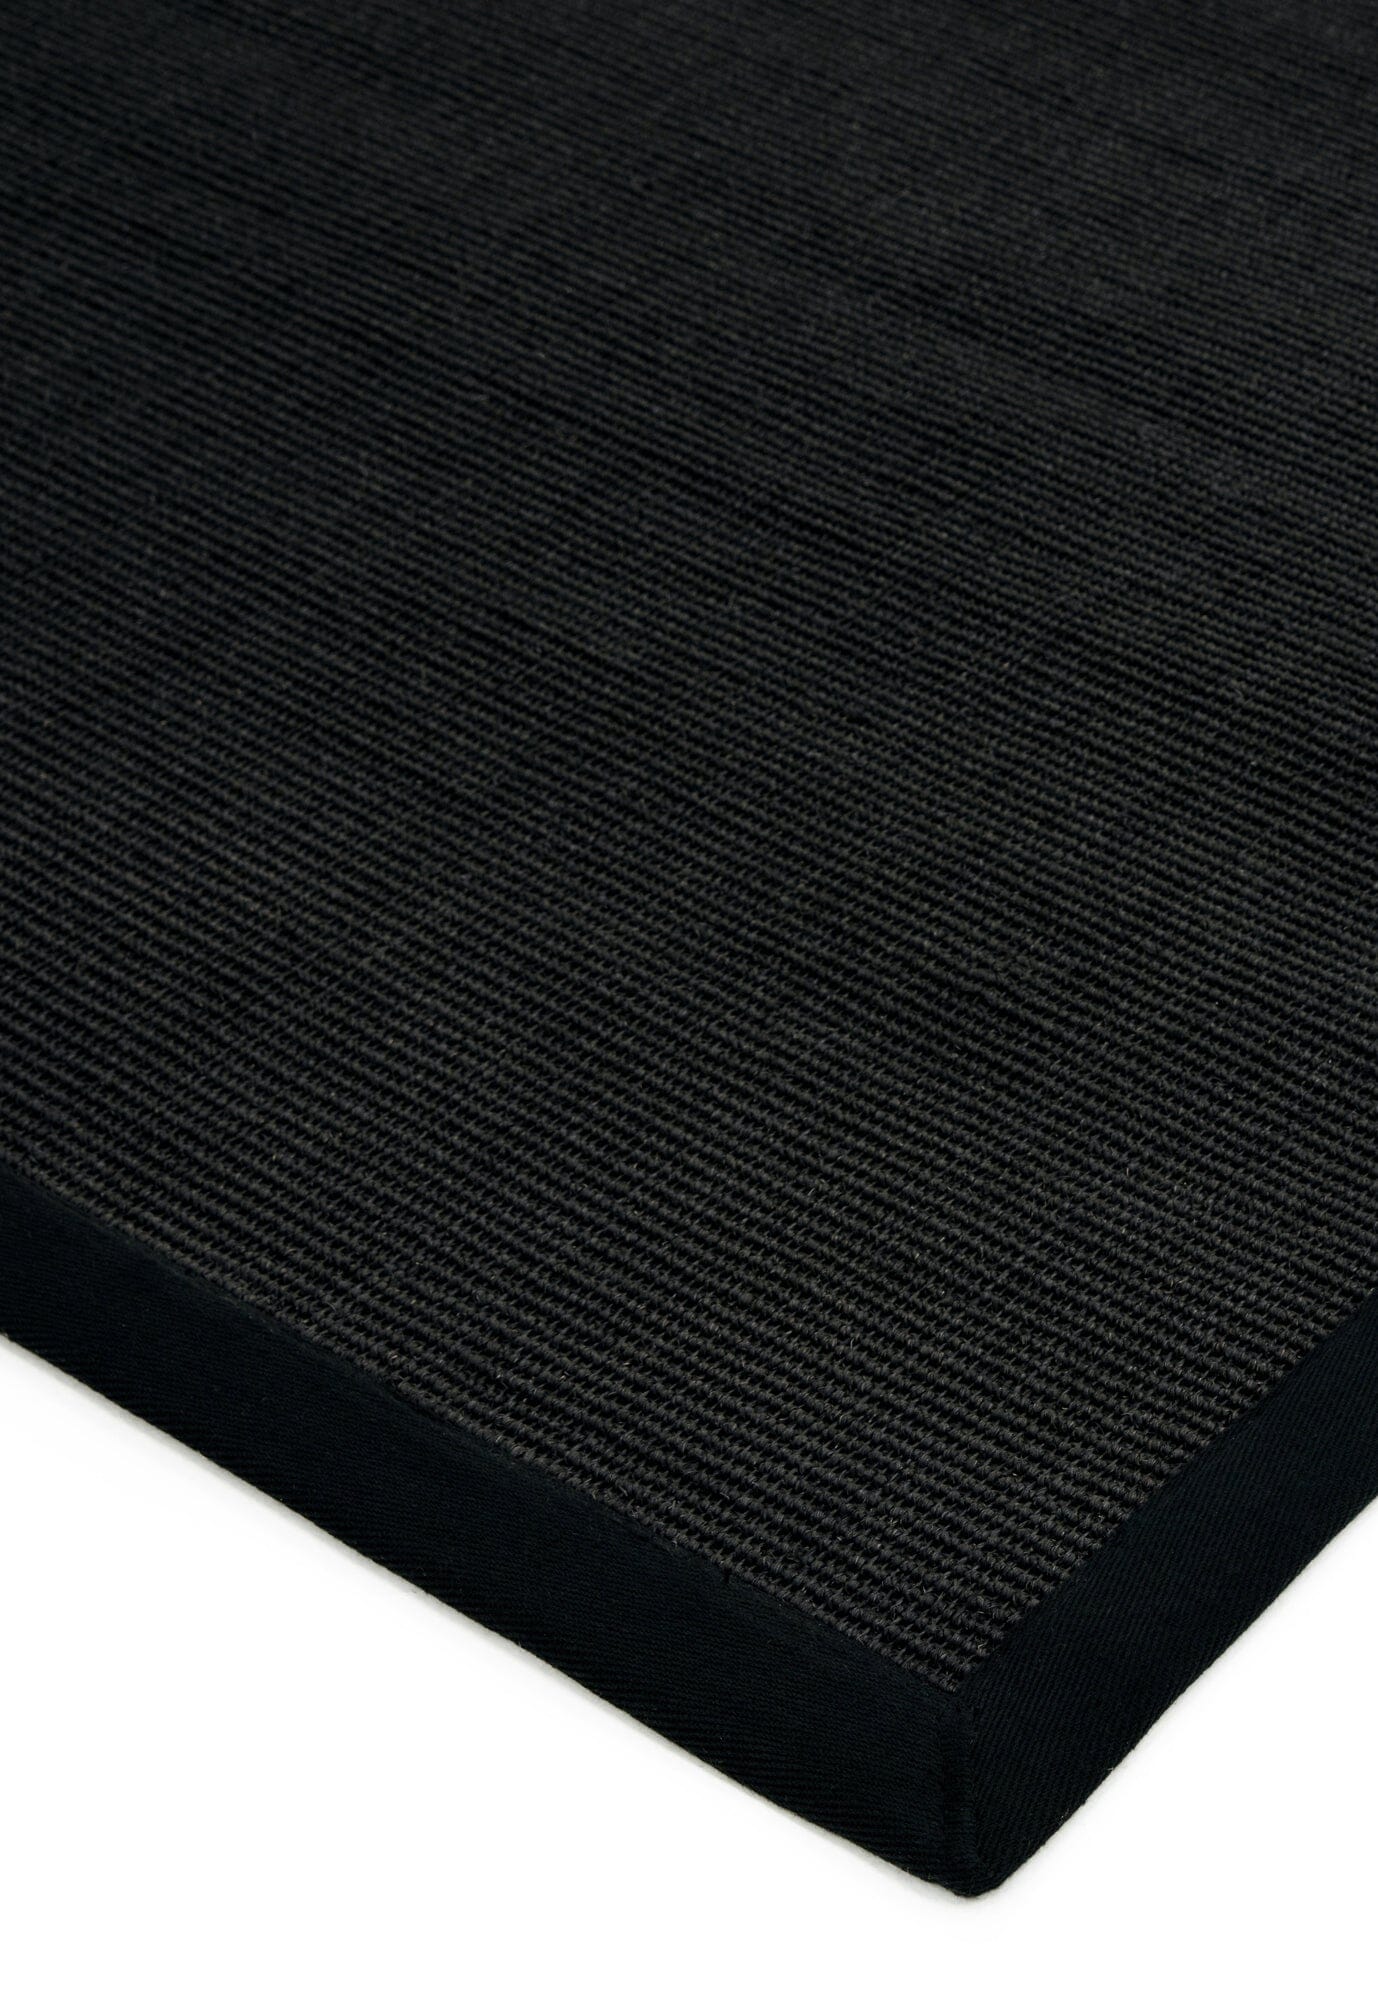 Asiatic Carpets Sisal Machine Woven Rug Black/Black - 240 x 340cm